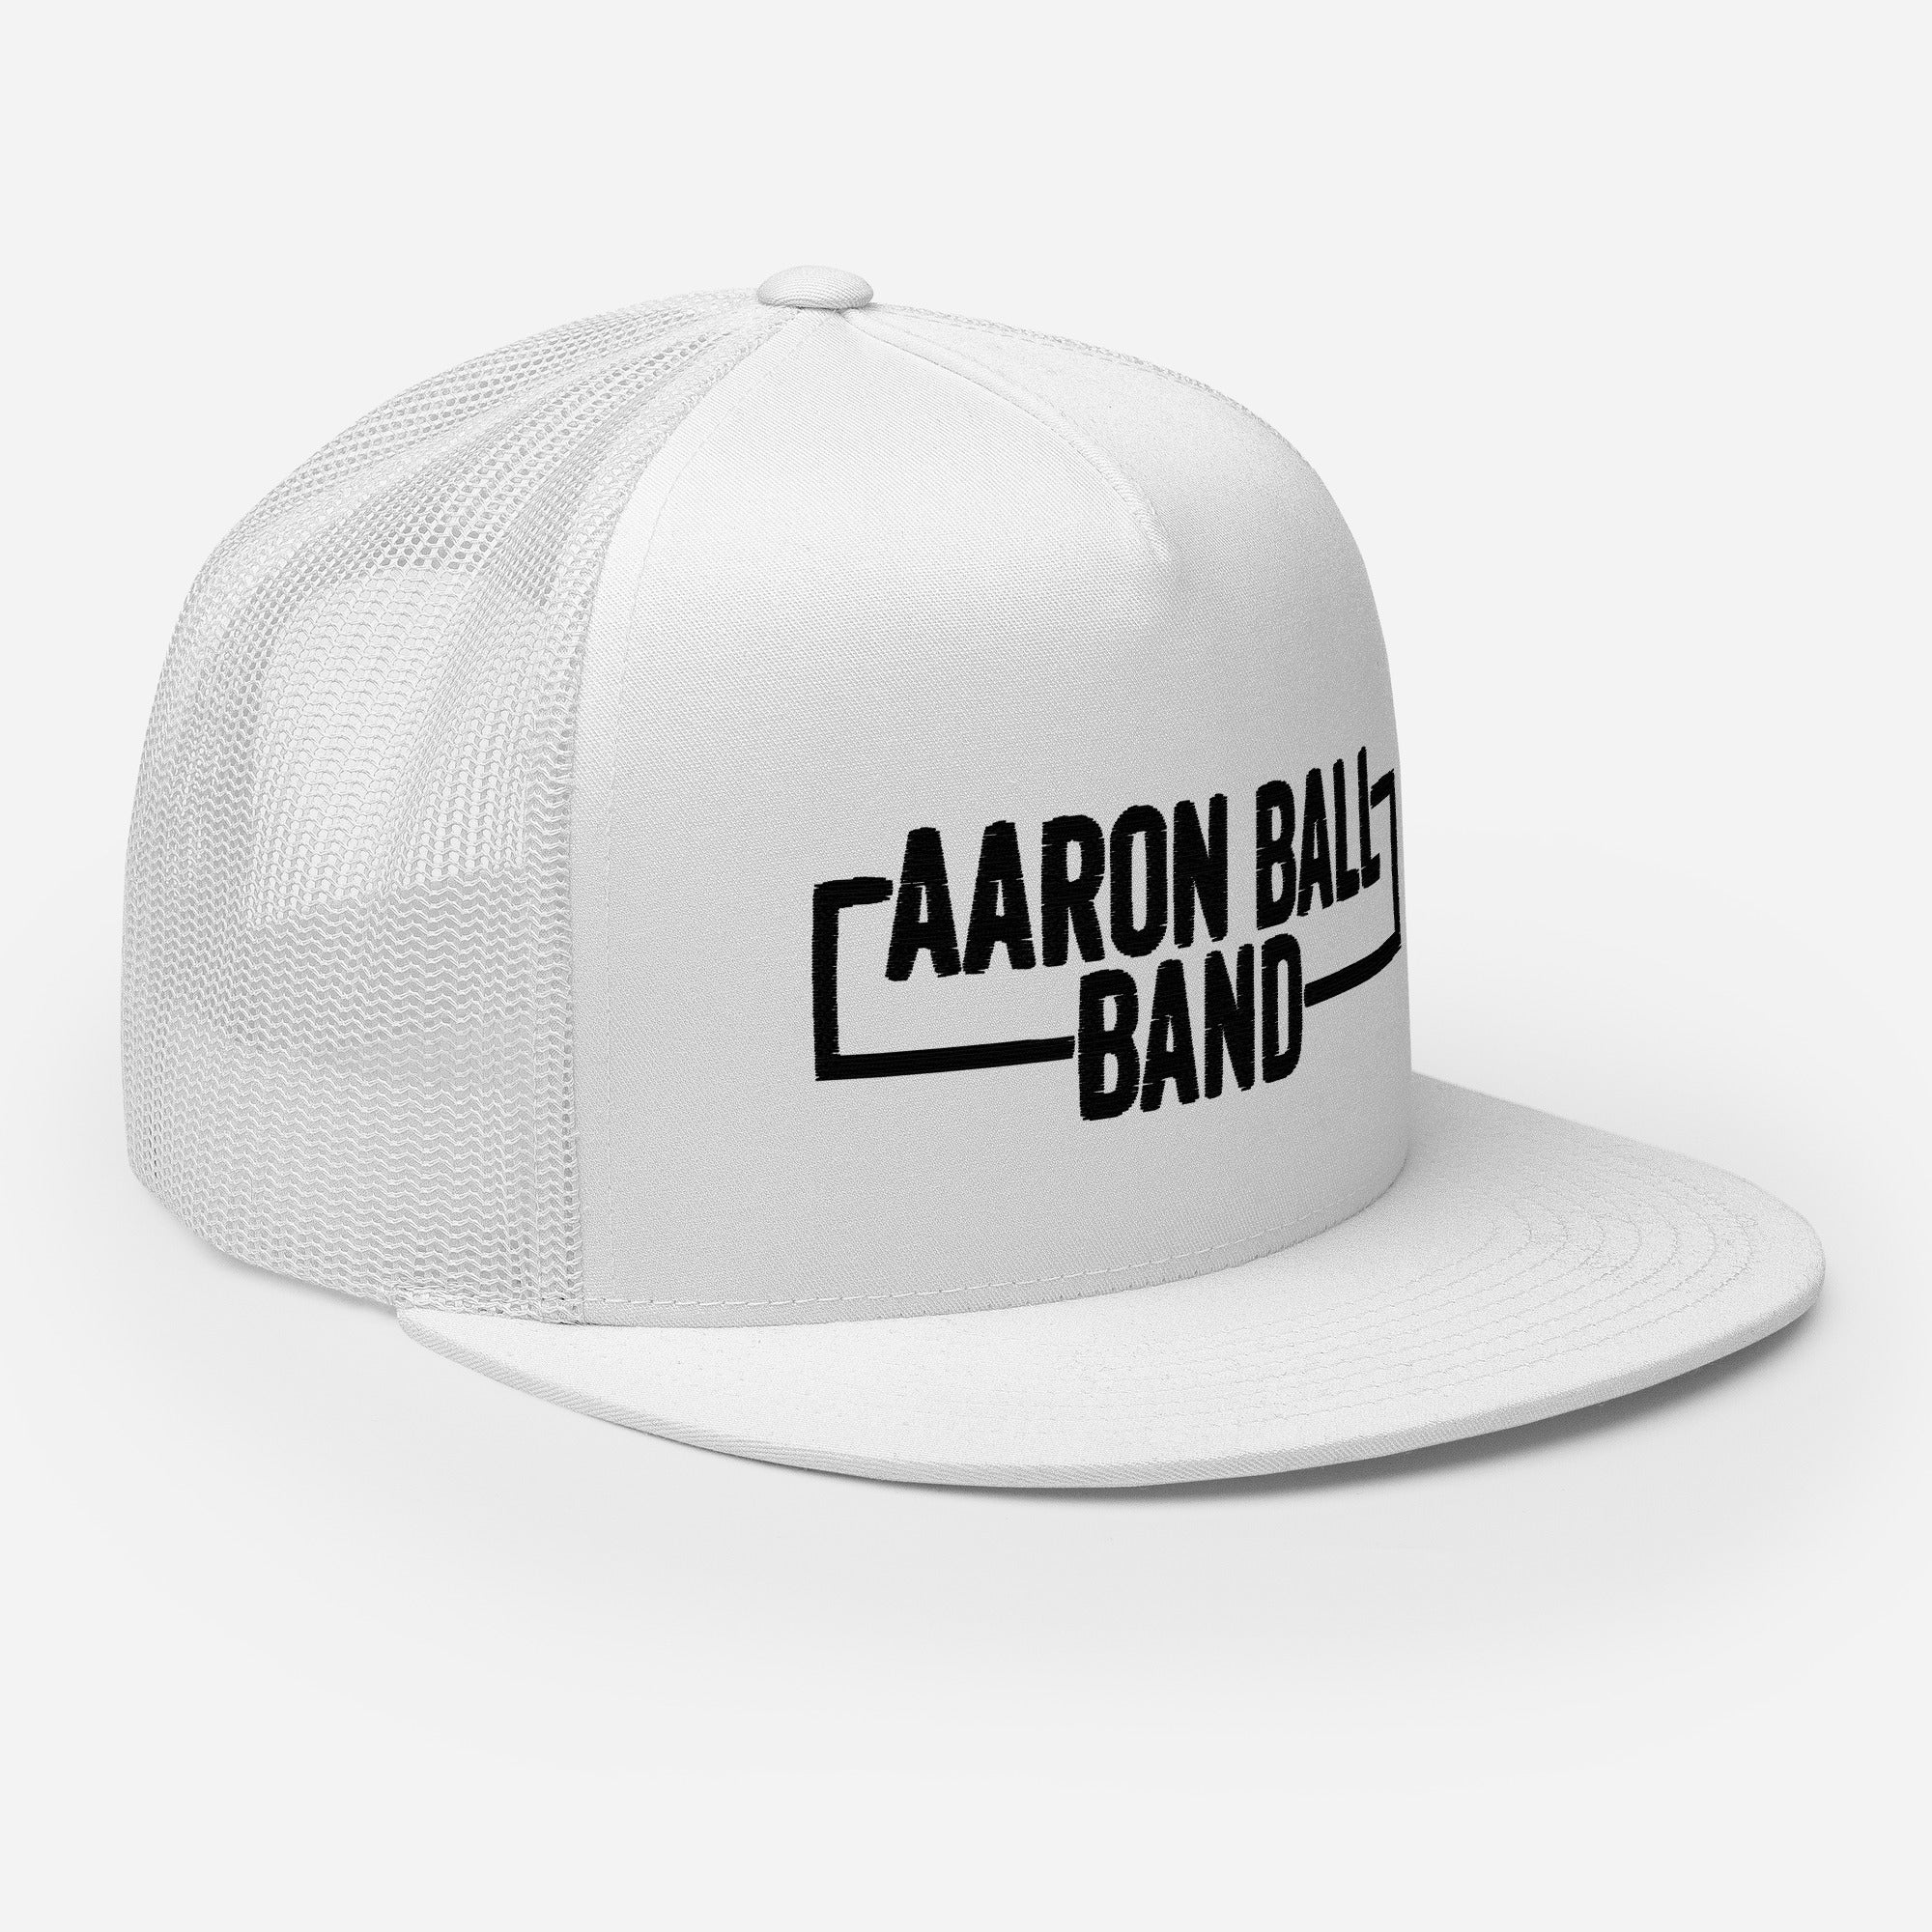 Aaron Ball Band - Trucker Cap